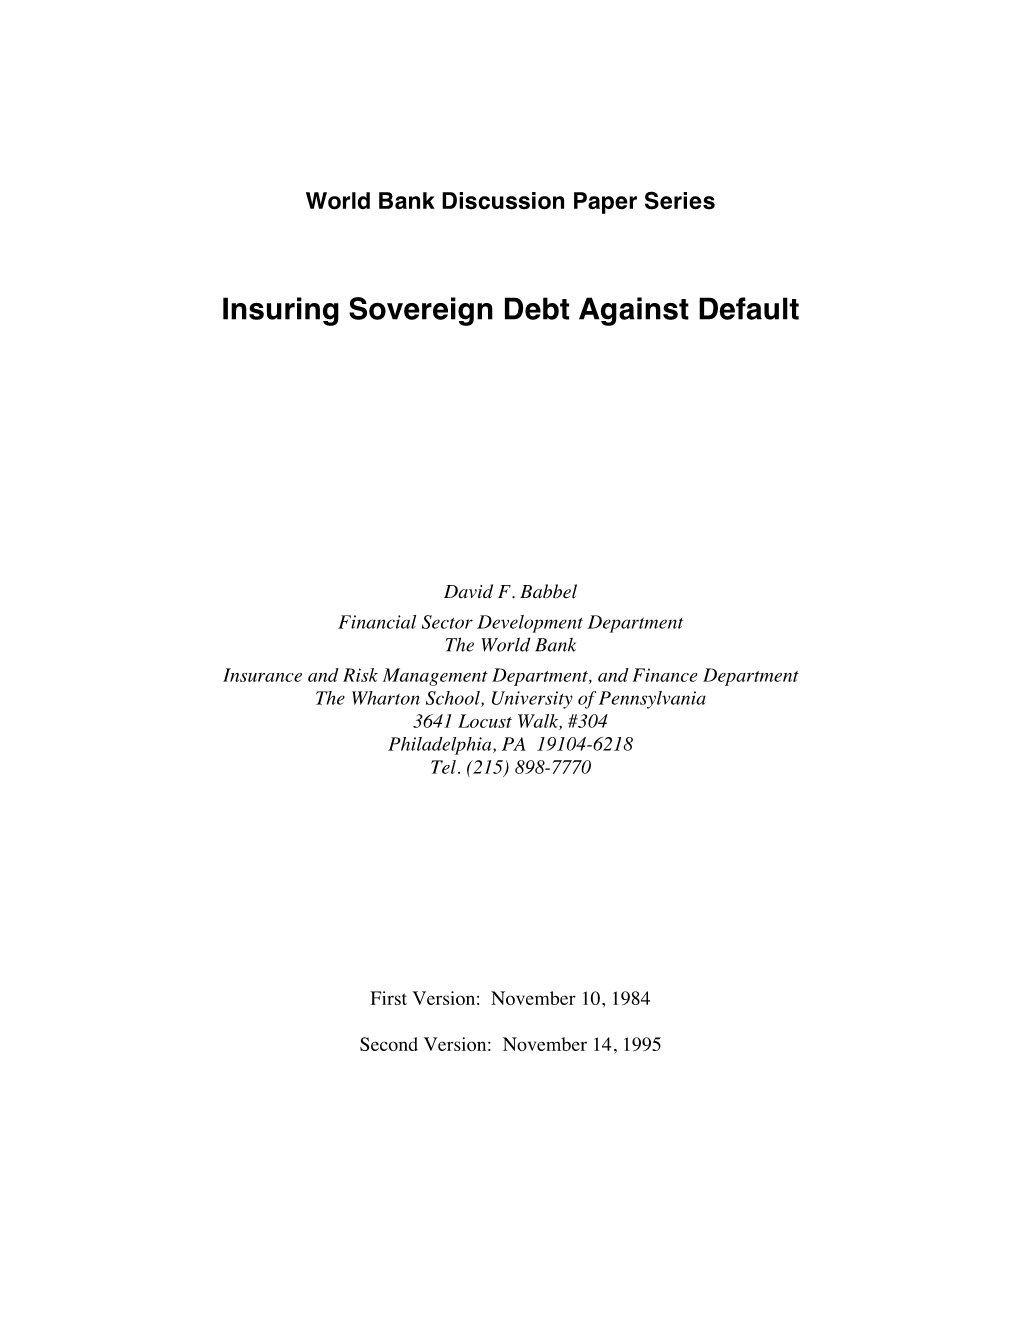 Insuring Sovereign Debt Against Default